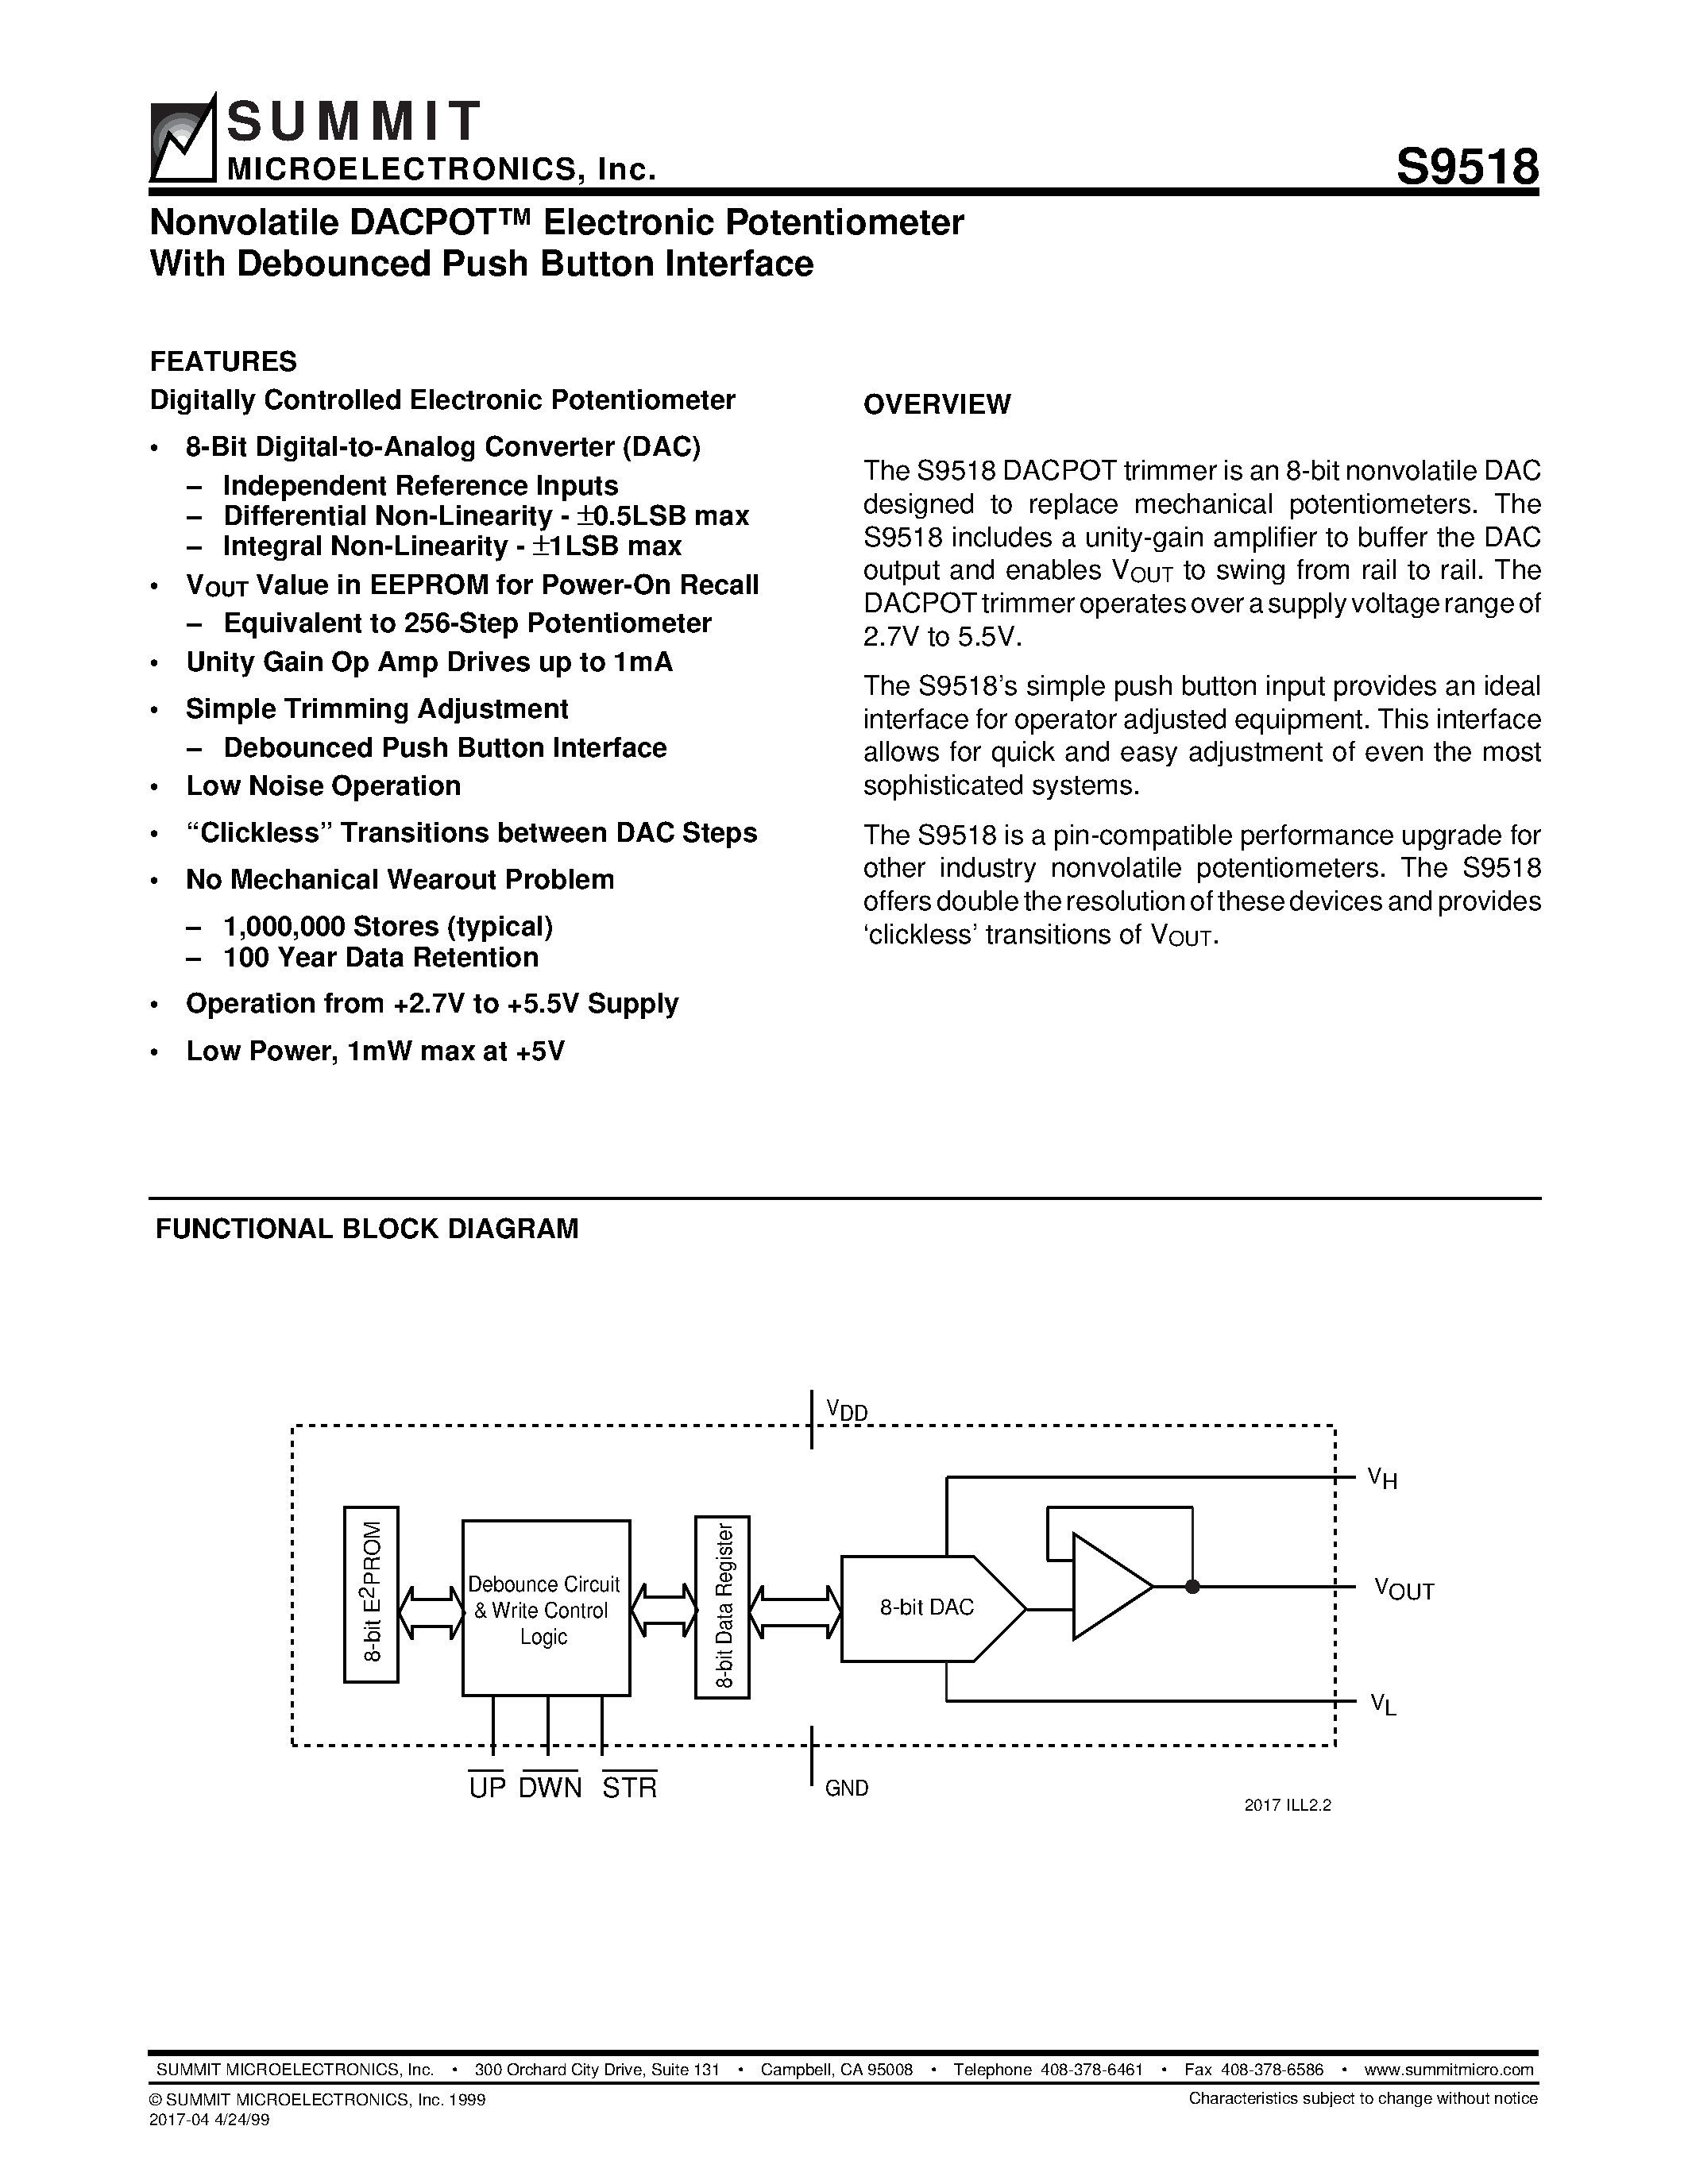 Datasheet S9518 - Nonvolatile DACPOT Electronic Potentiometer With Debounced Push Button Interface page 1